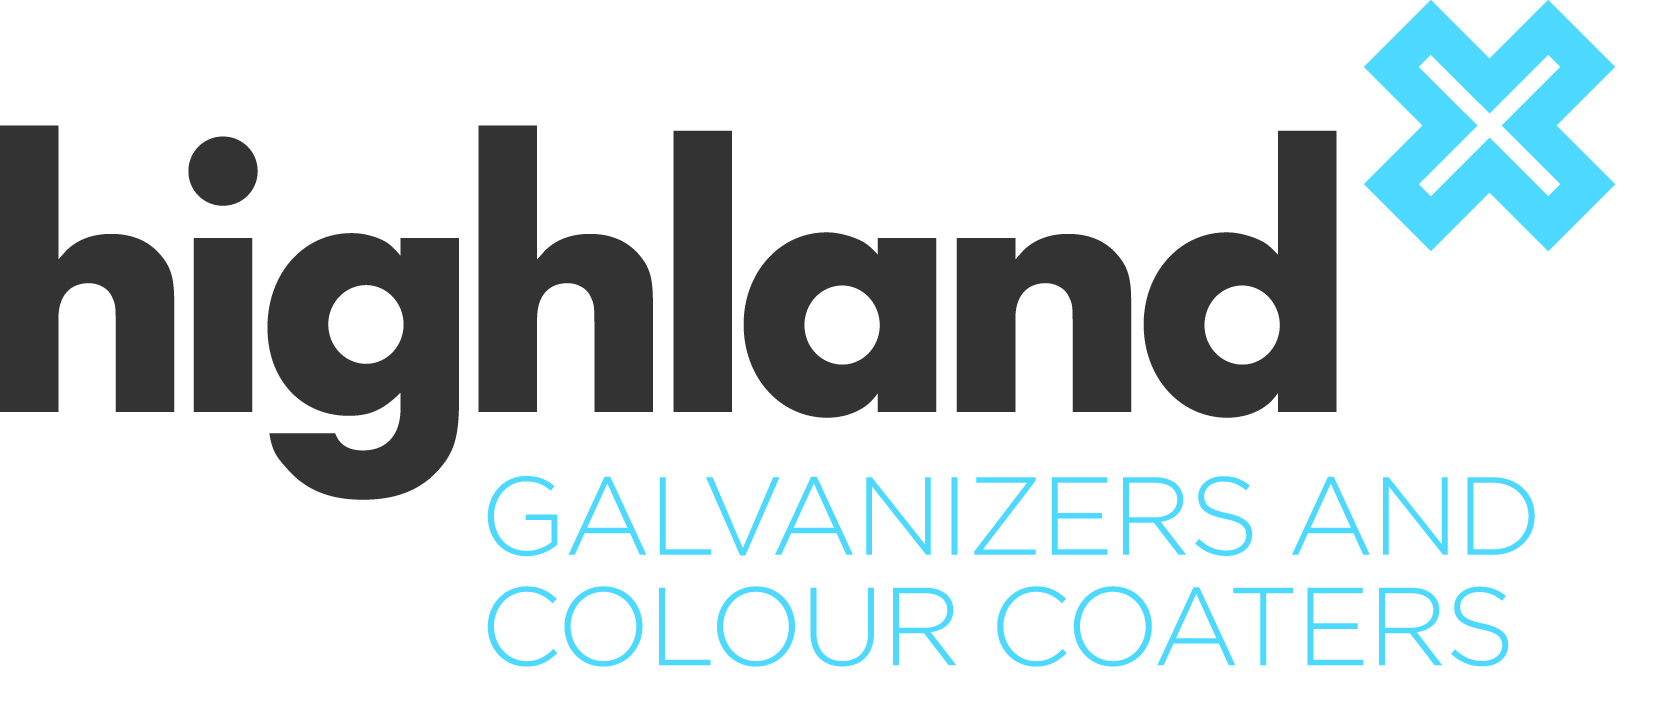 Highland Colour Coaters Ltd